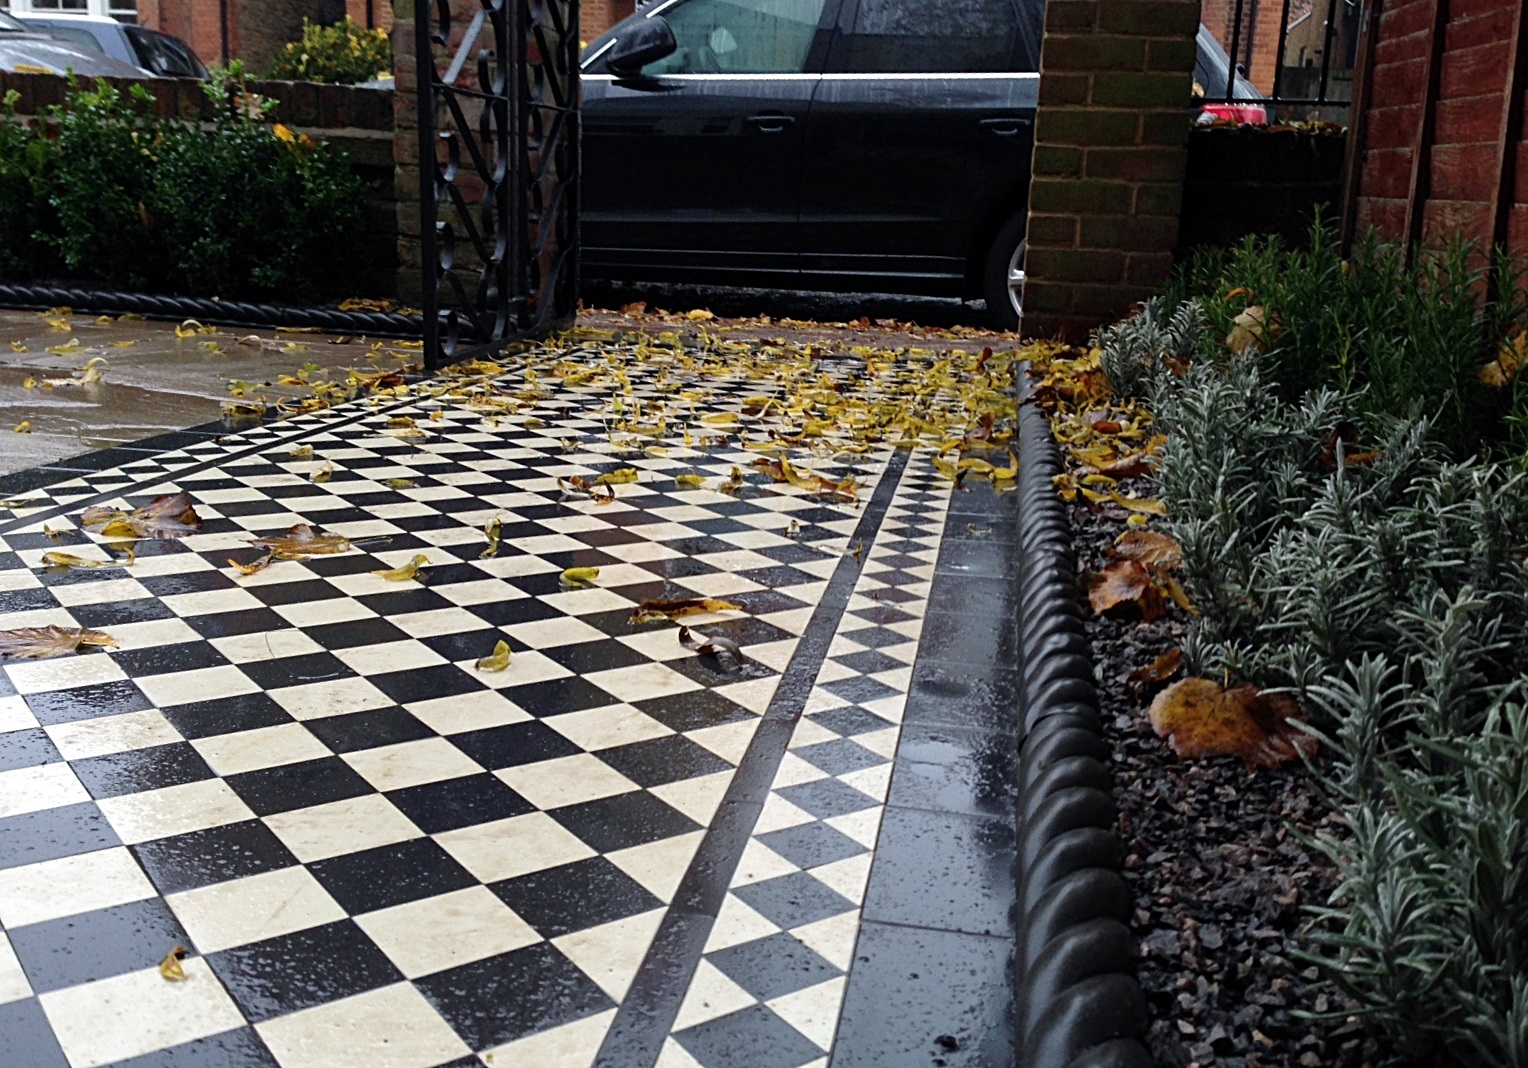 victroian black and white mosaic tile garden path paving formal planting buxus bay lavender edge tiles london (3)